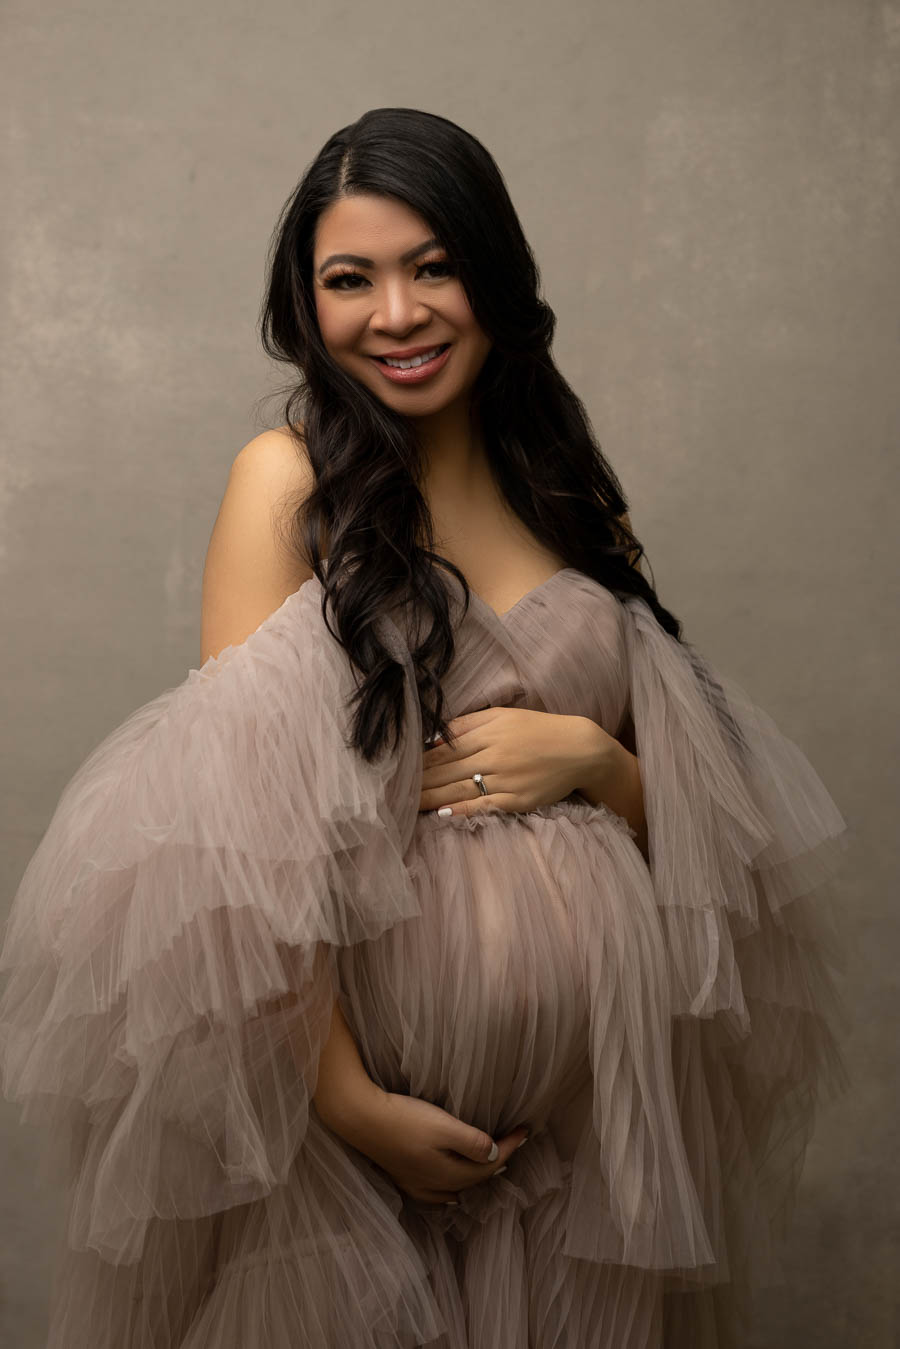 maternity shoot dress